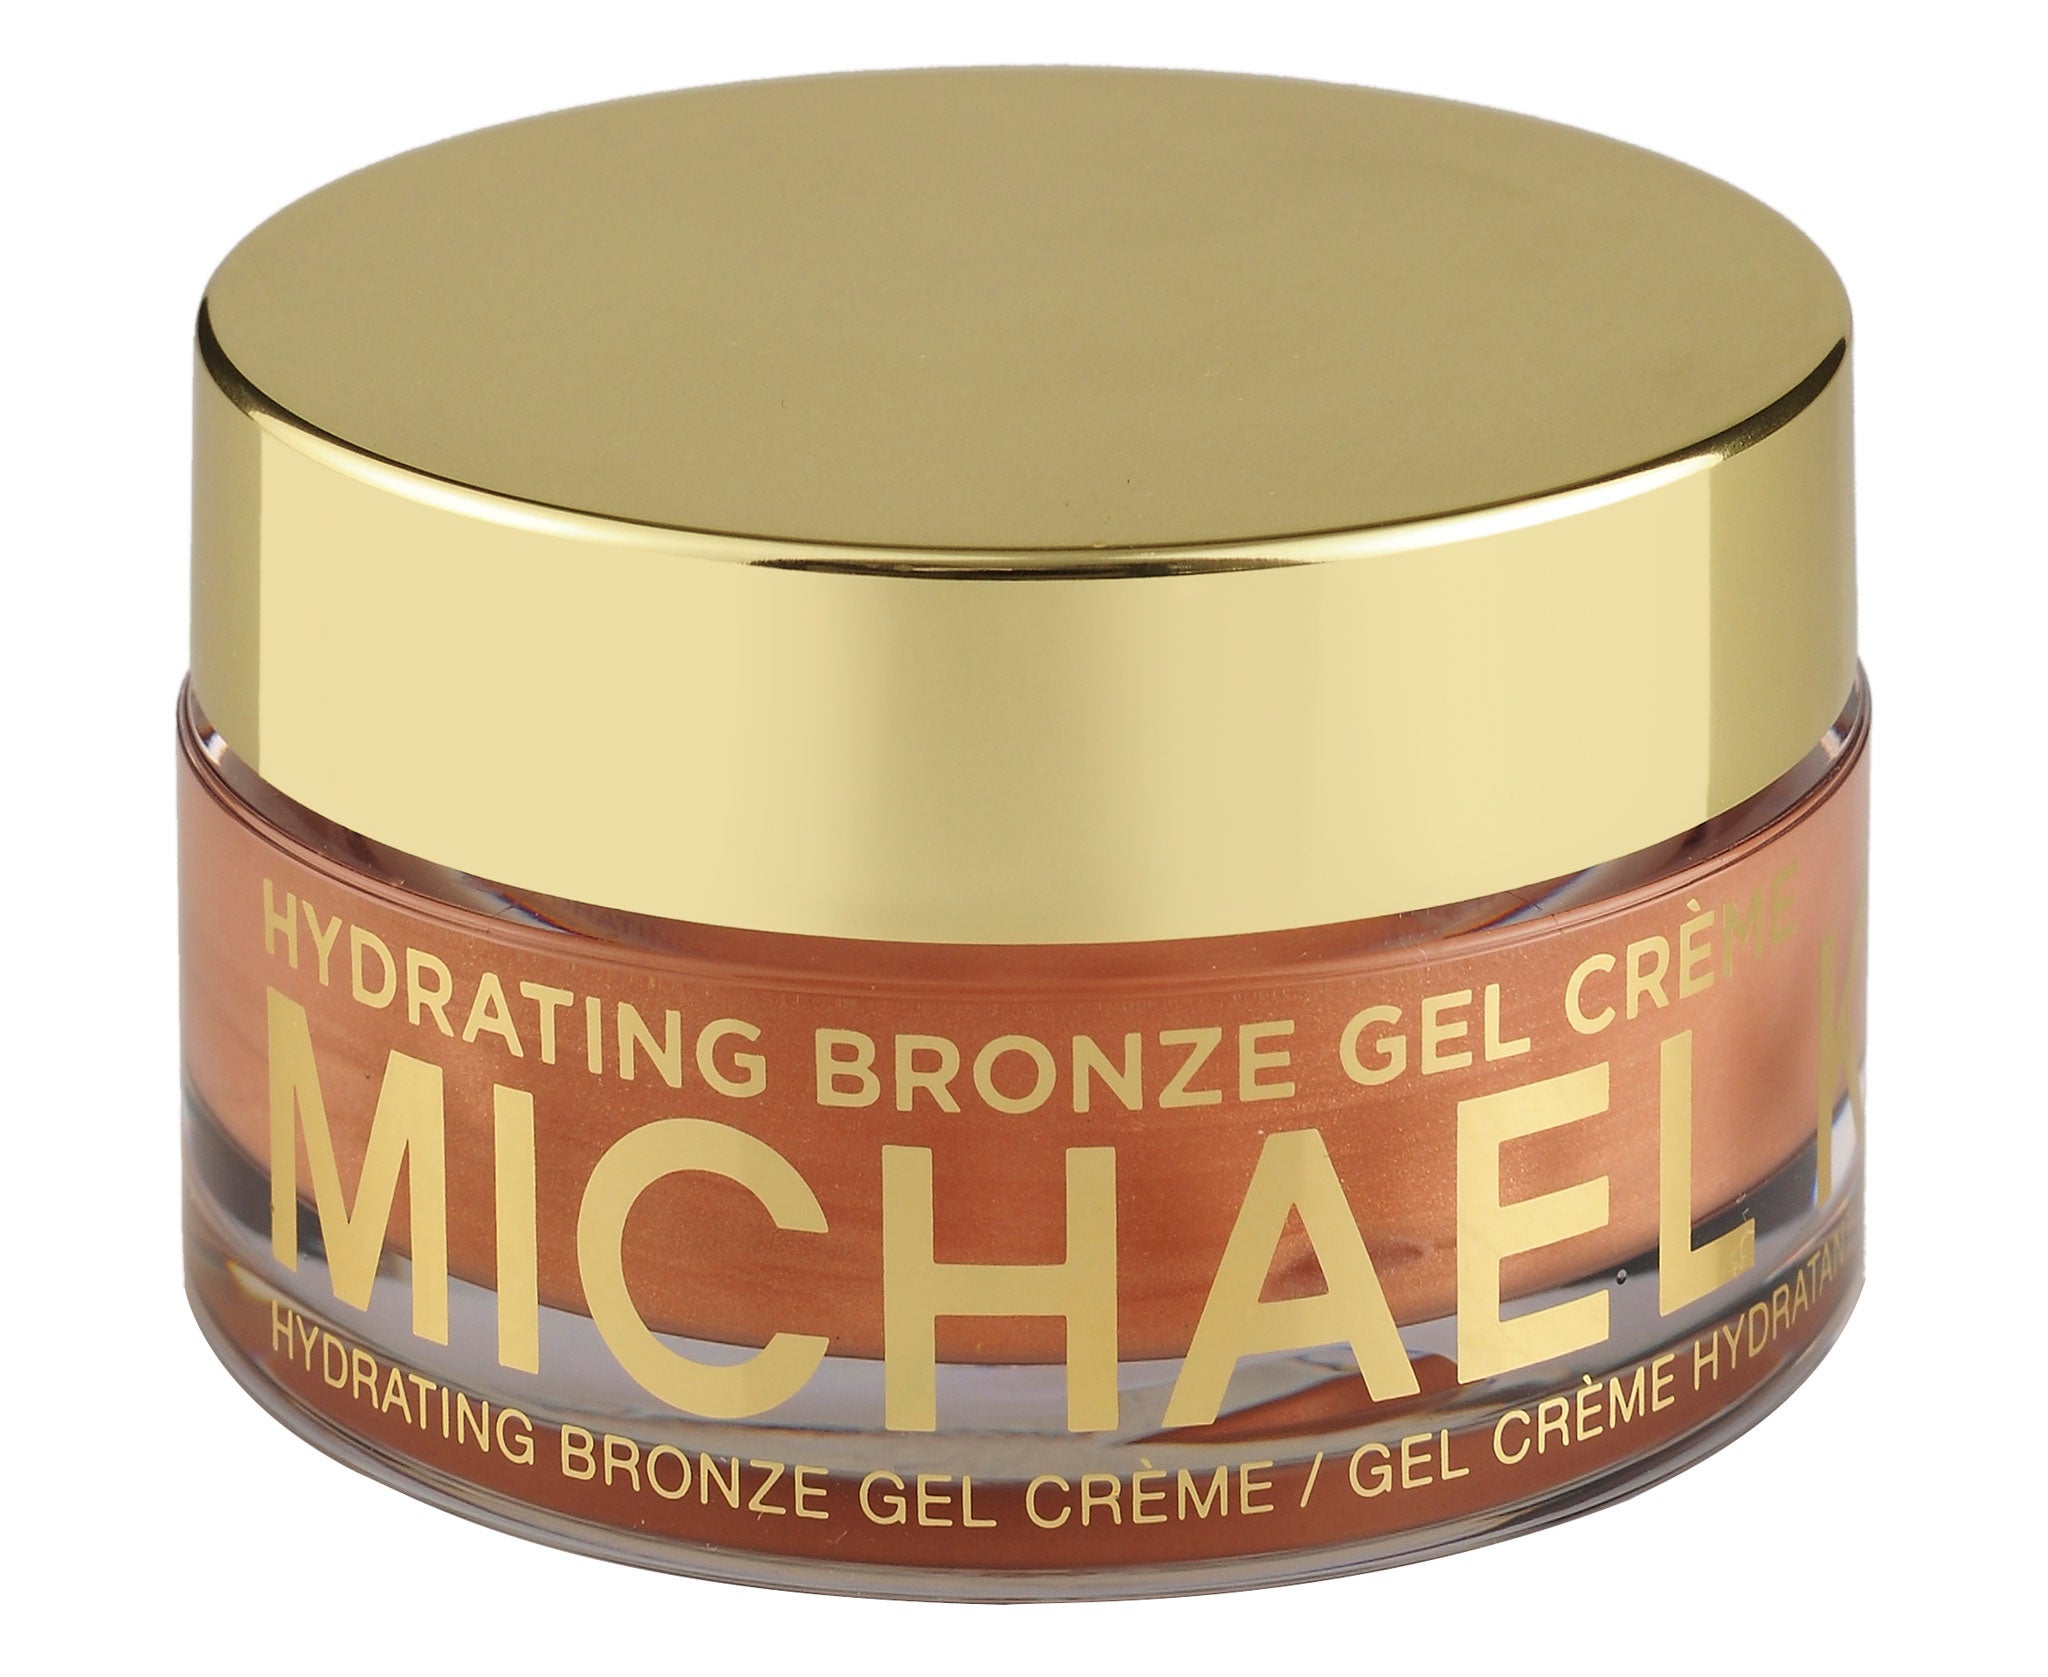 Hydrating bronze gel crème in 01 permanent vacation, £25, Michael Kors, escentual.com